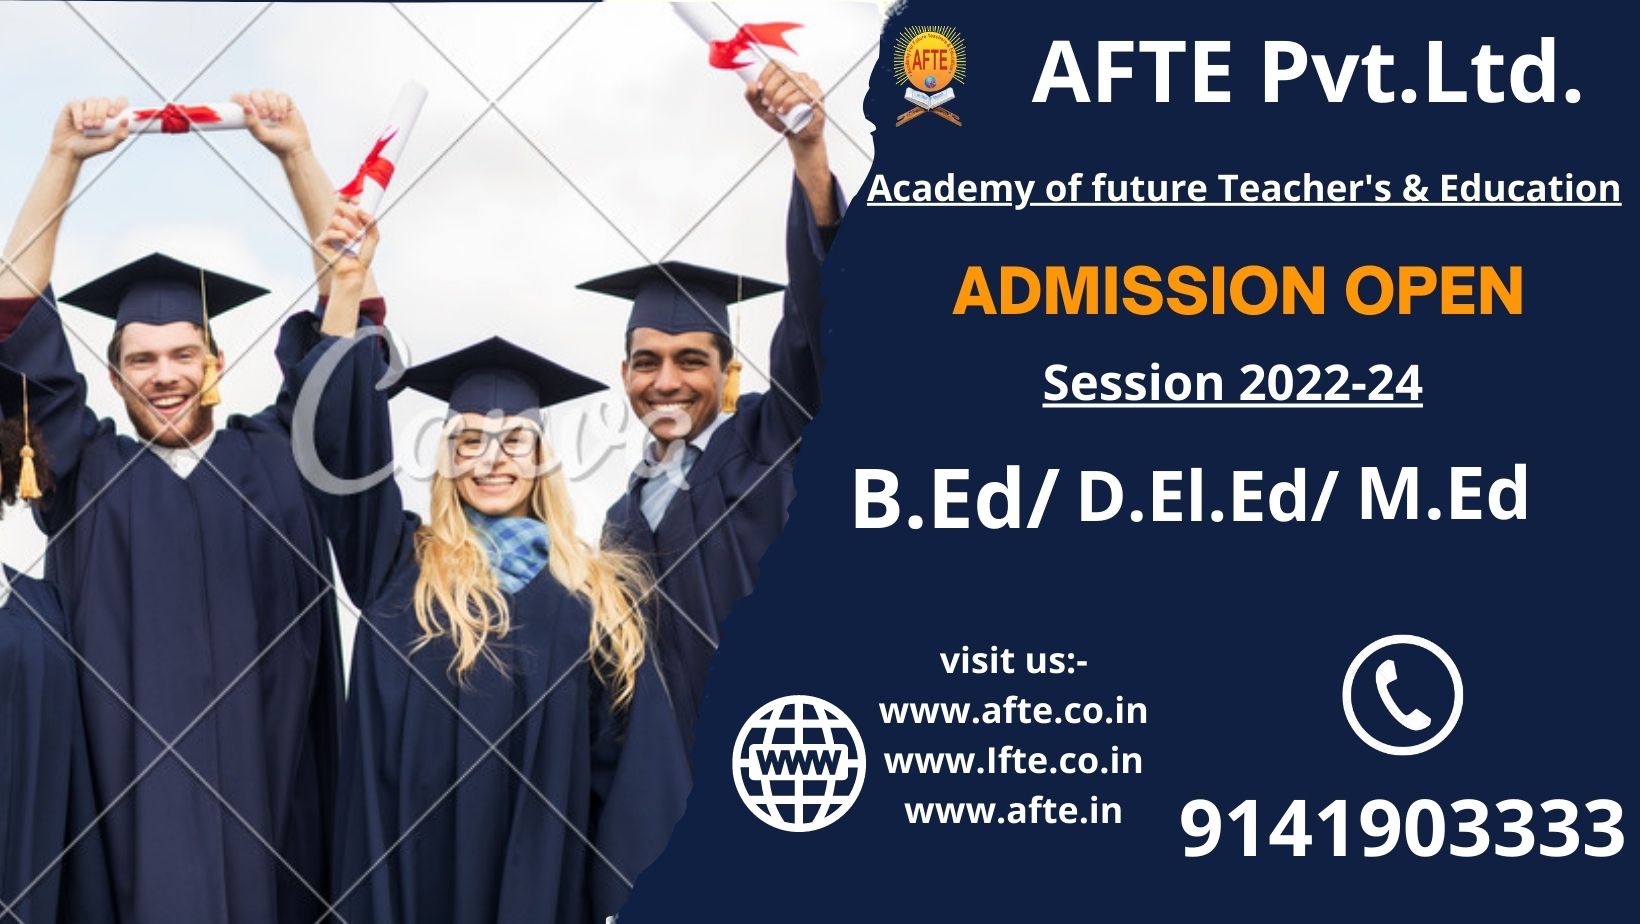 Direct Admission B.Ed/D.El.Ed/M.Ed contact us 9141903333Education and LearningCoaching ClassesWest DelhiRohini